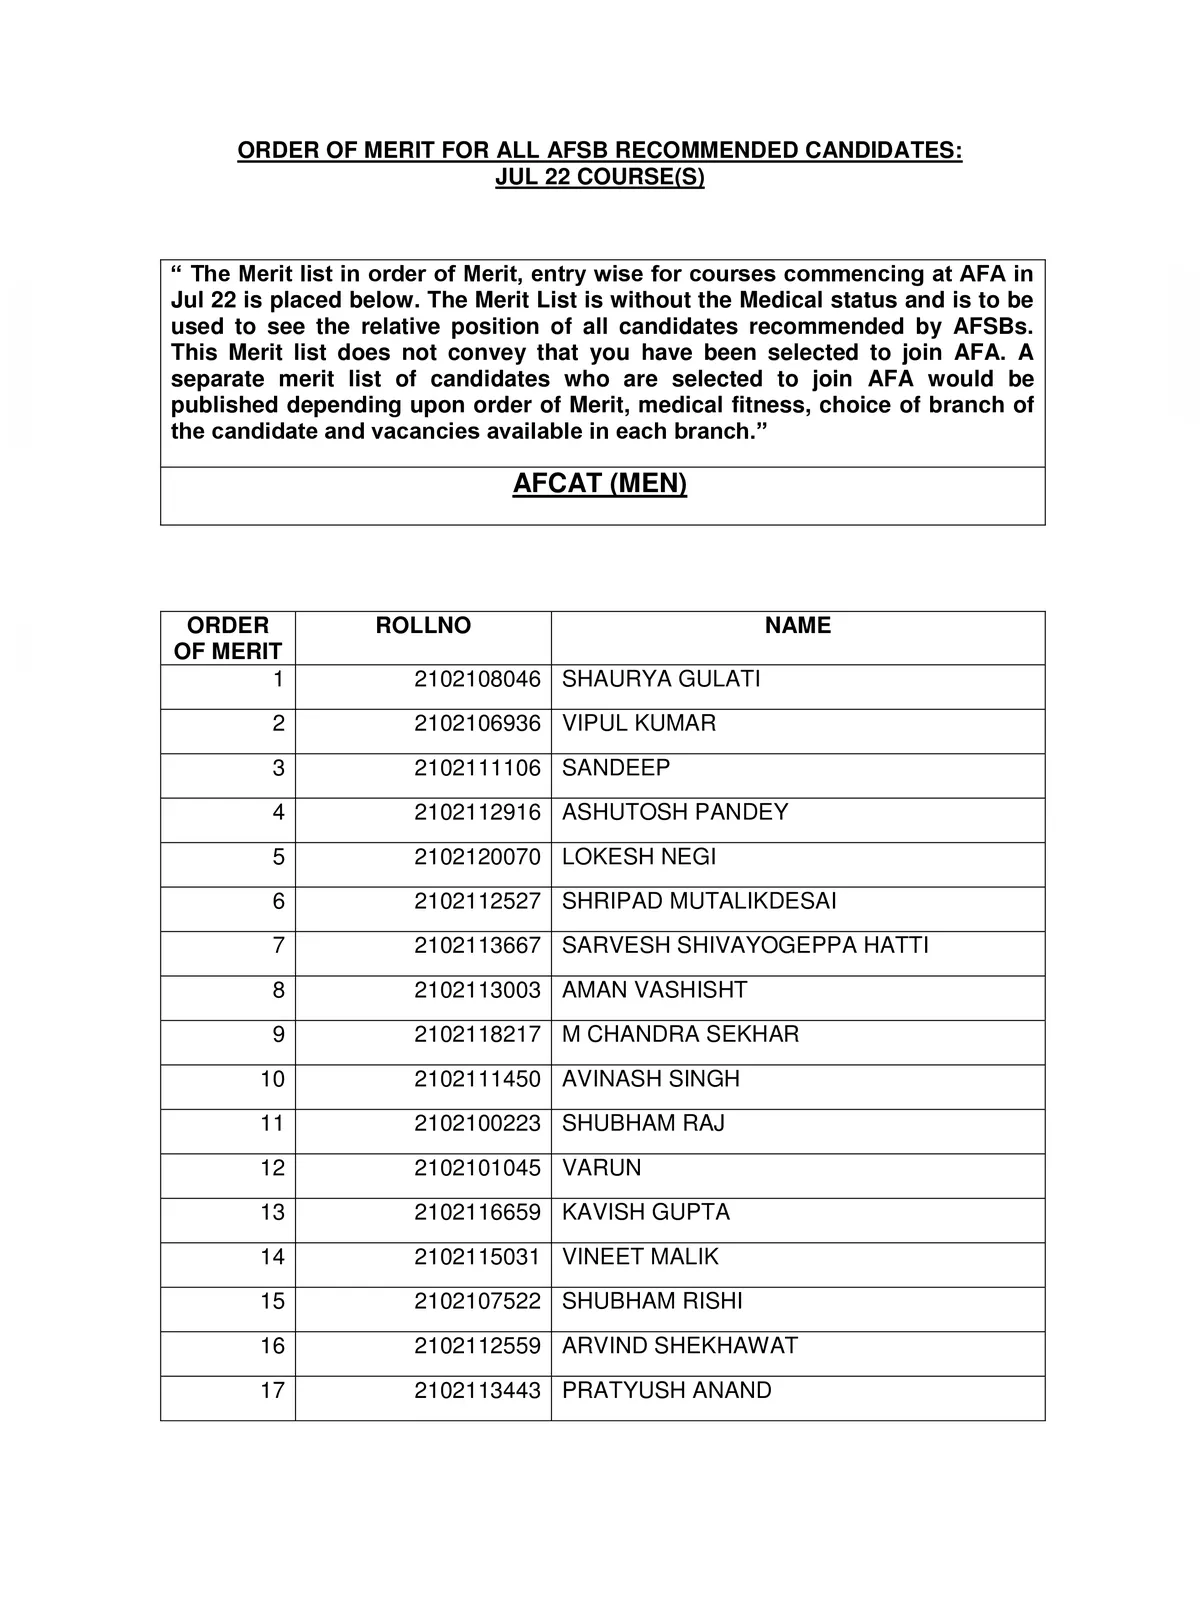 AFCAT Merit List July 2022